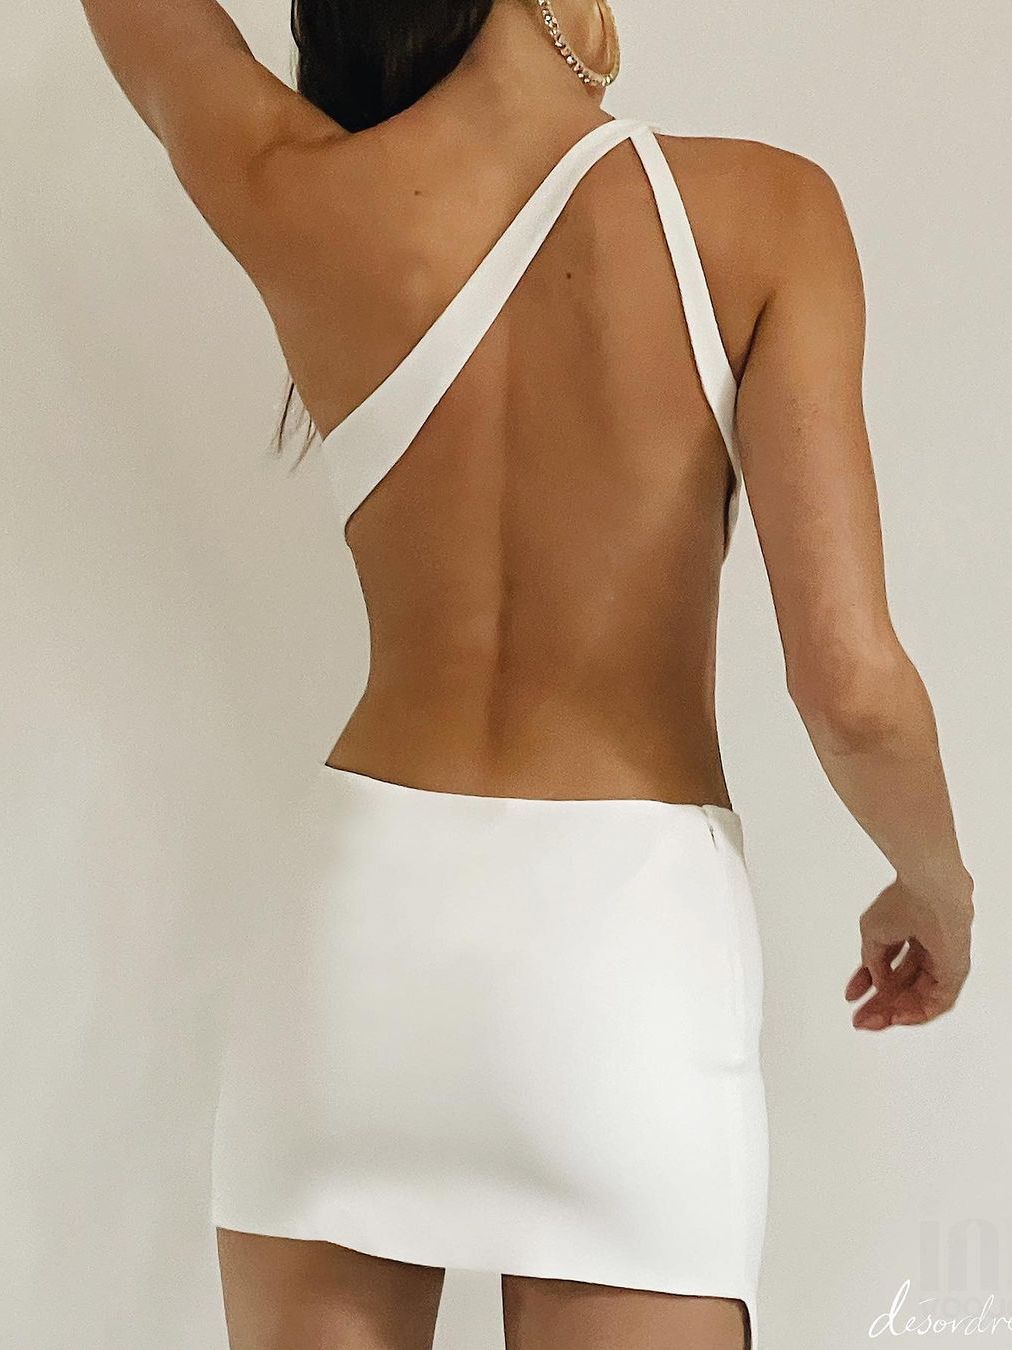 Bandage Dress 2022 Women White Bodycon Dress Elegant Sexy Cut Out Evening Club Party Dress High Quality Summer Runway Fashion